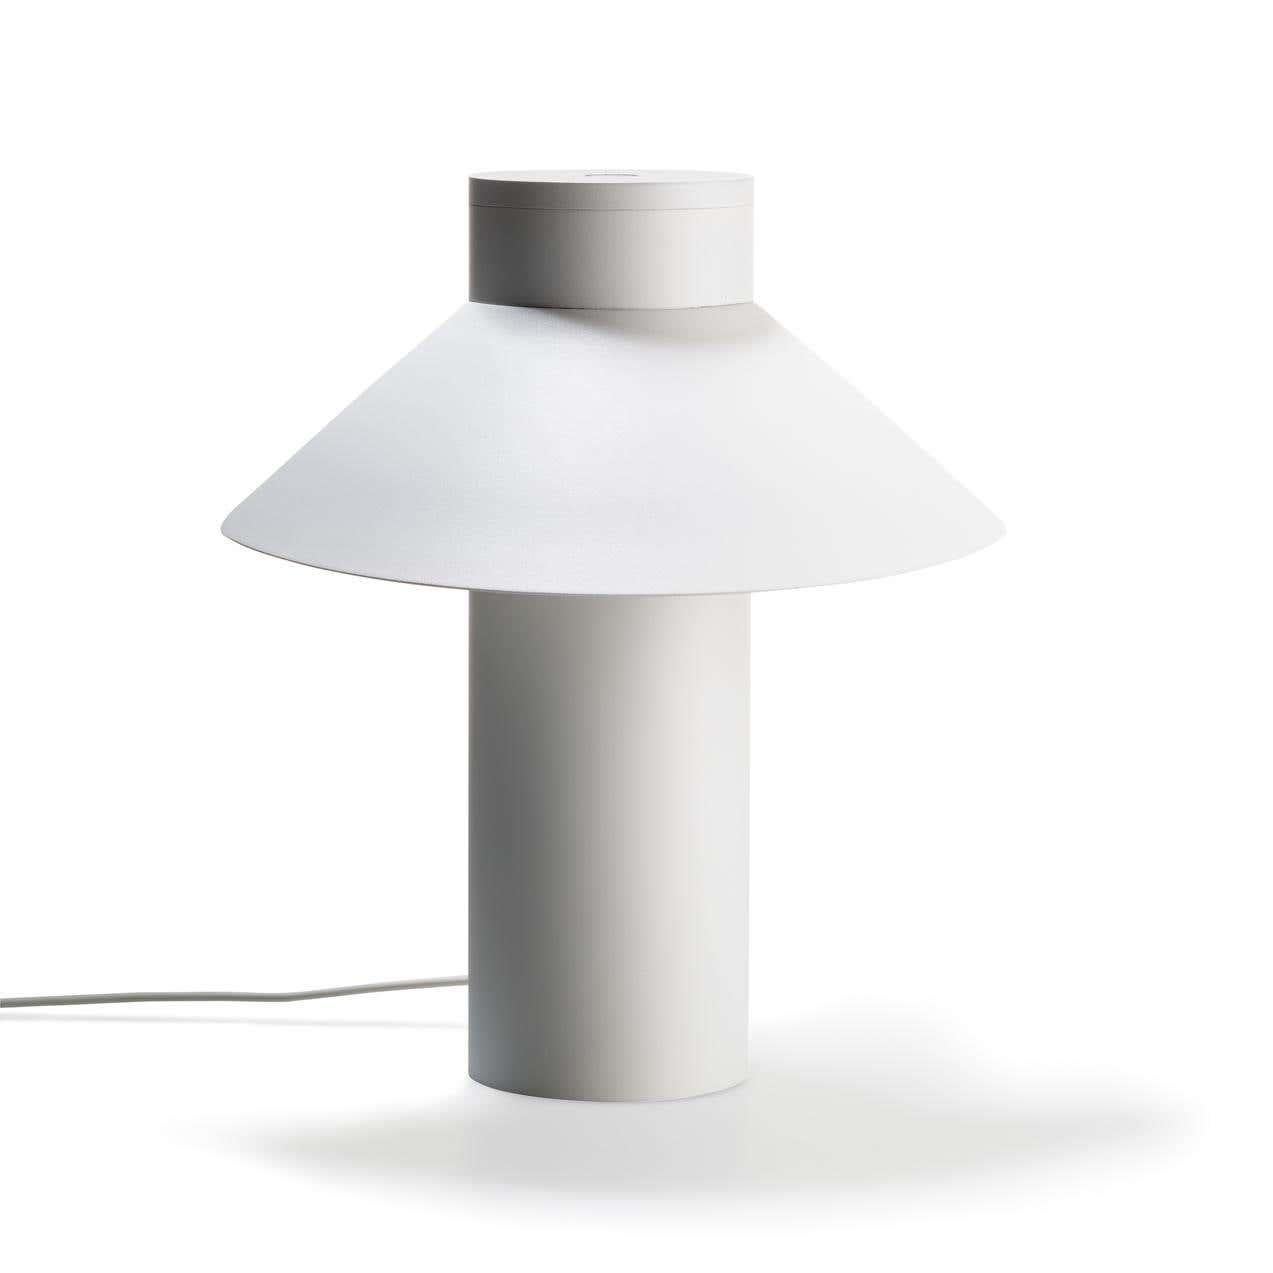 Joe Colombo 'Riscio' Steel Table Lamp by Karakter In New Condition In Barcelona, Barcelona